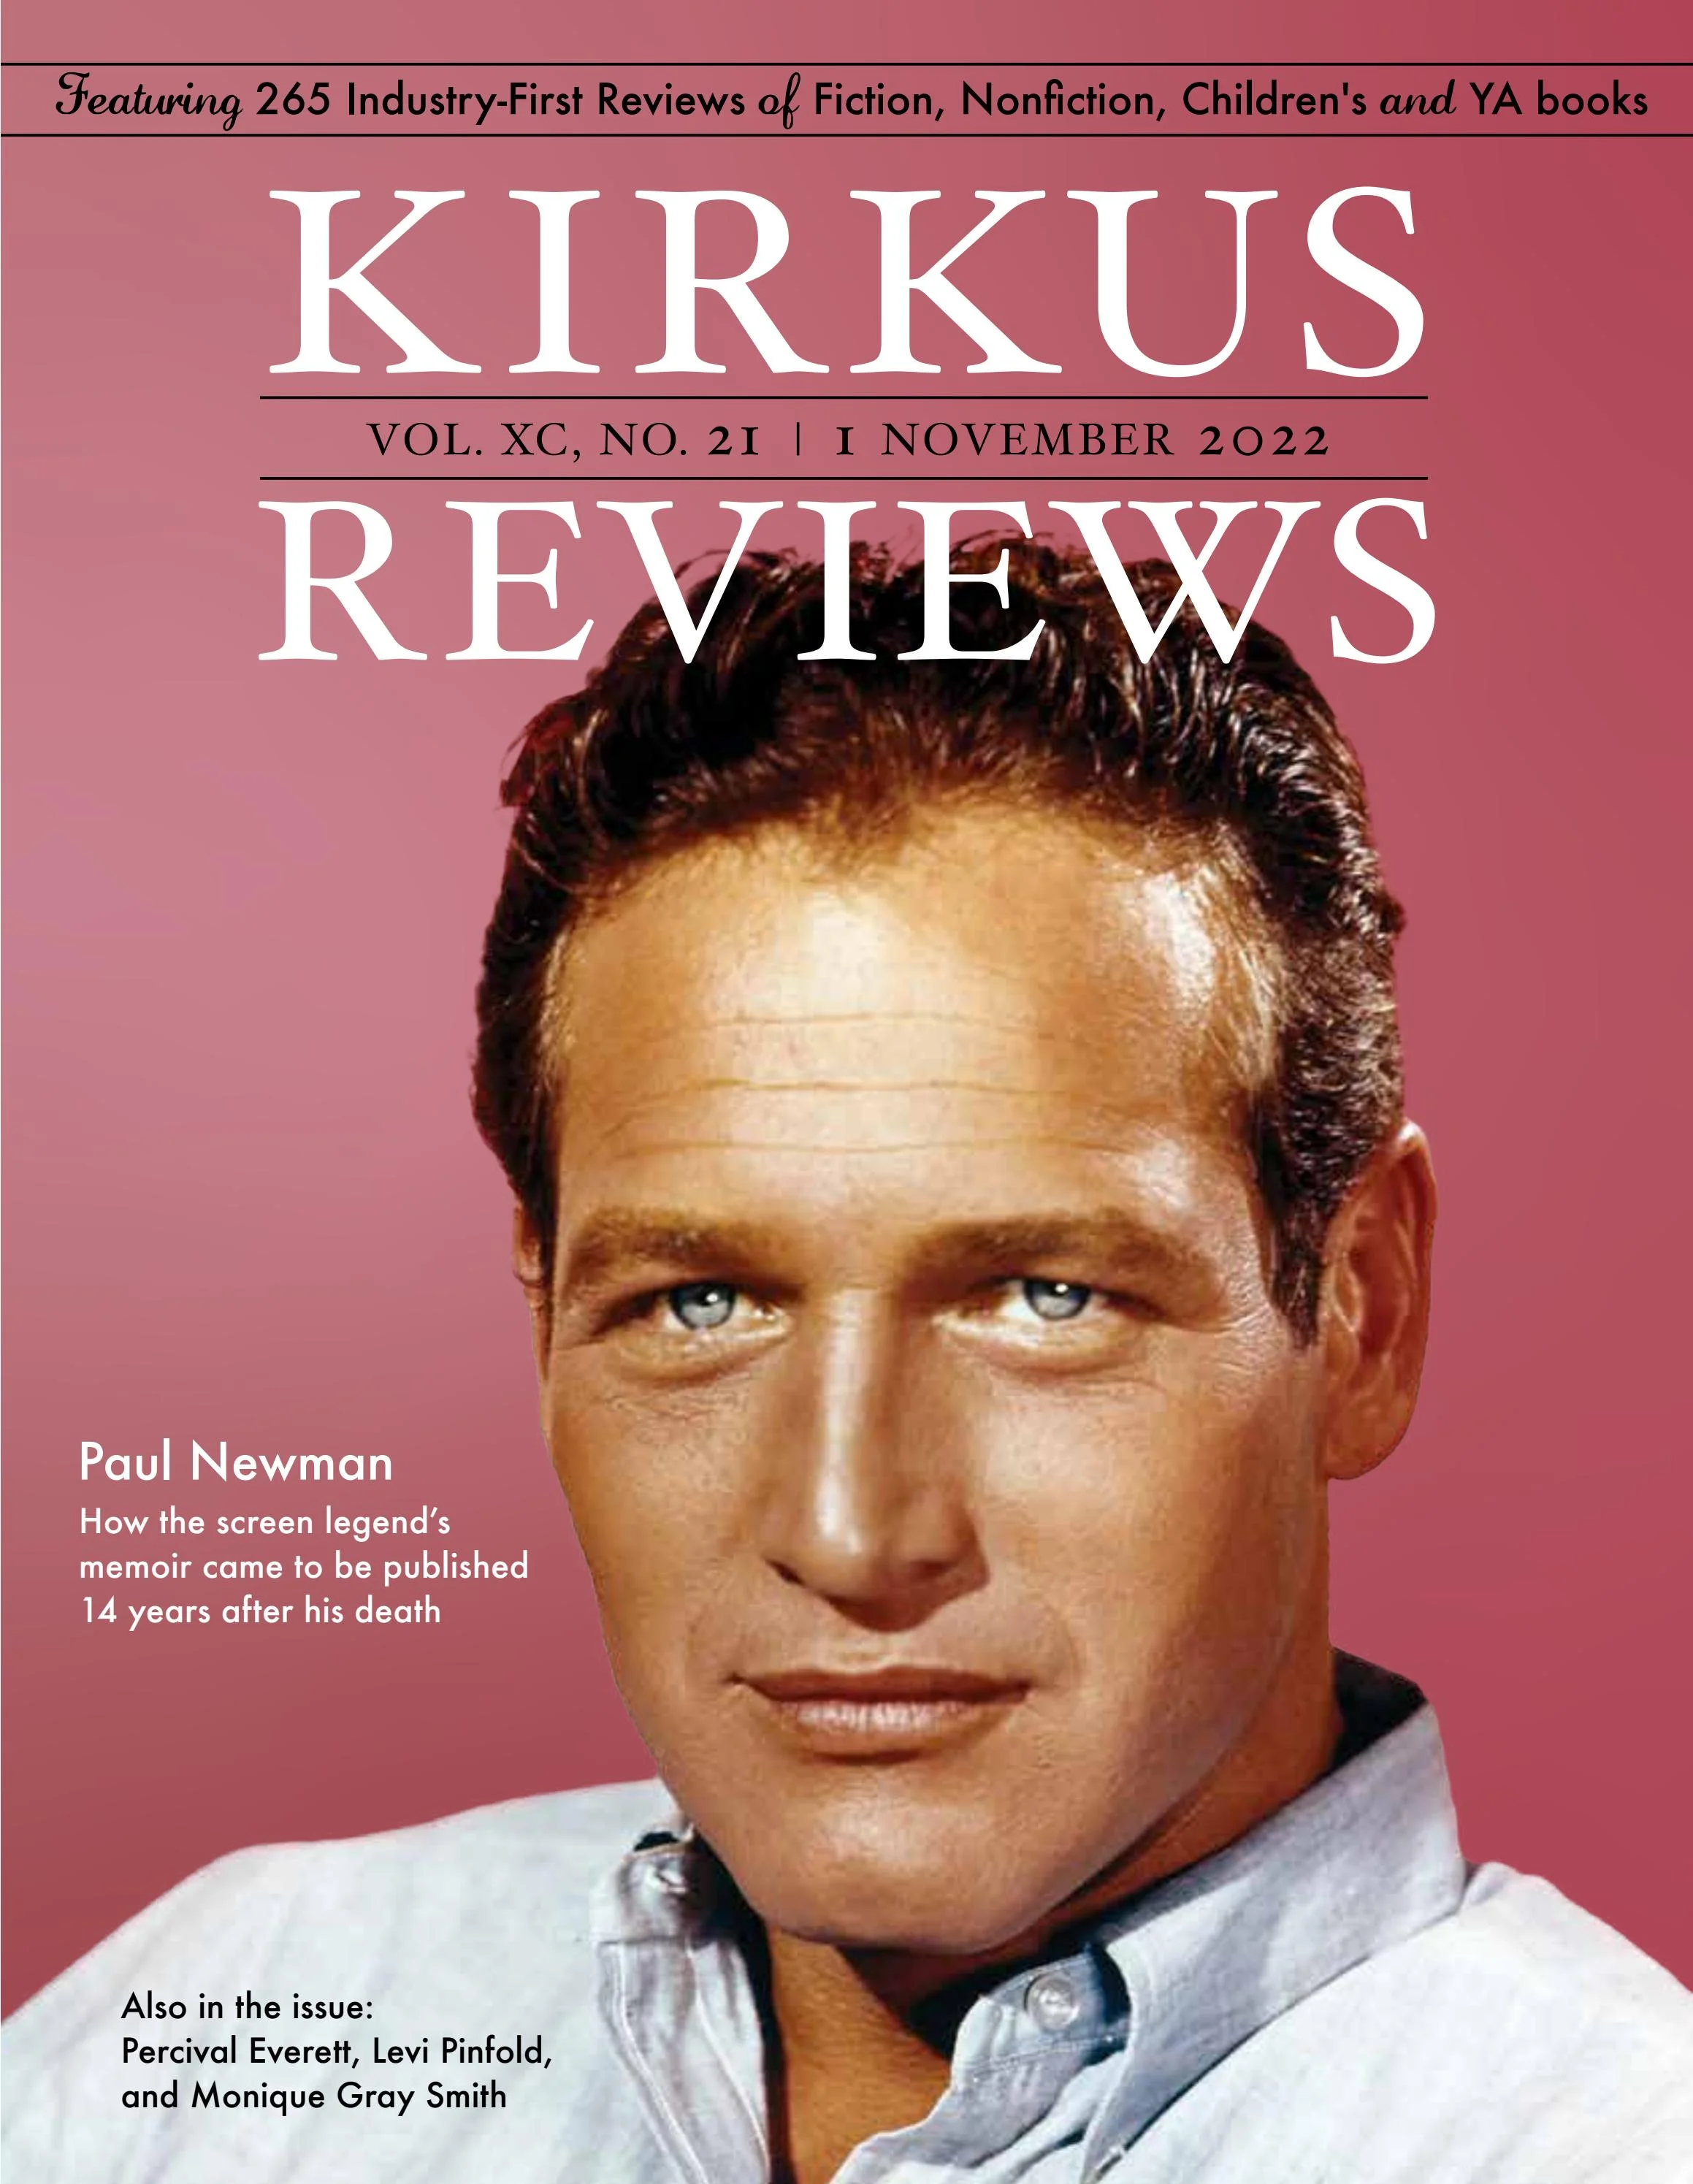 November 1, 2022: Volume XC, No. 21 by Kirkus Reviews - Issuu